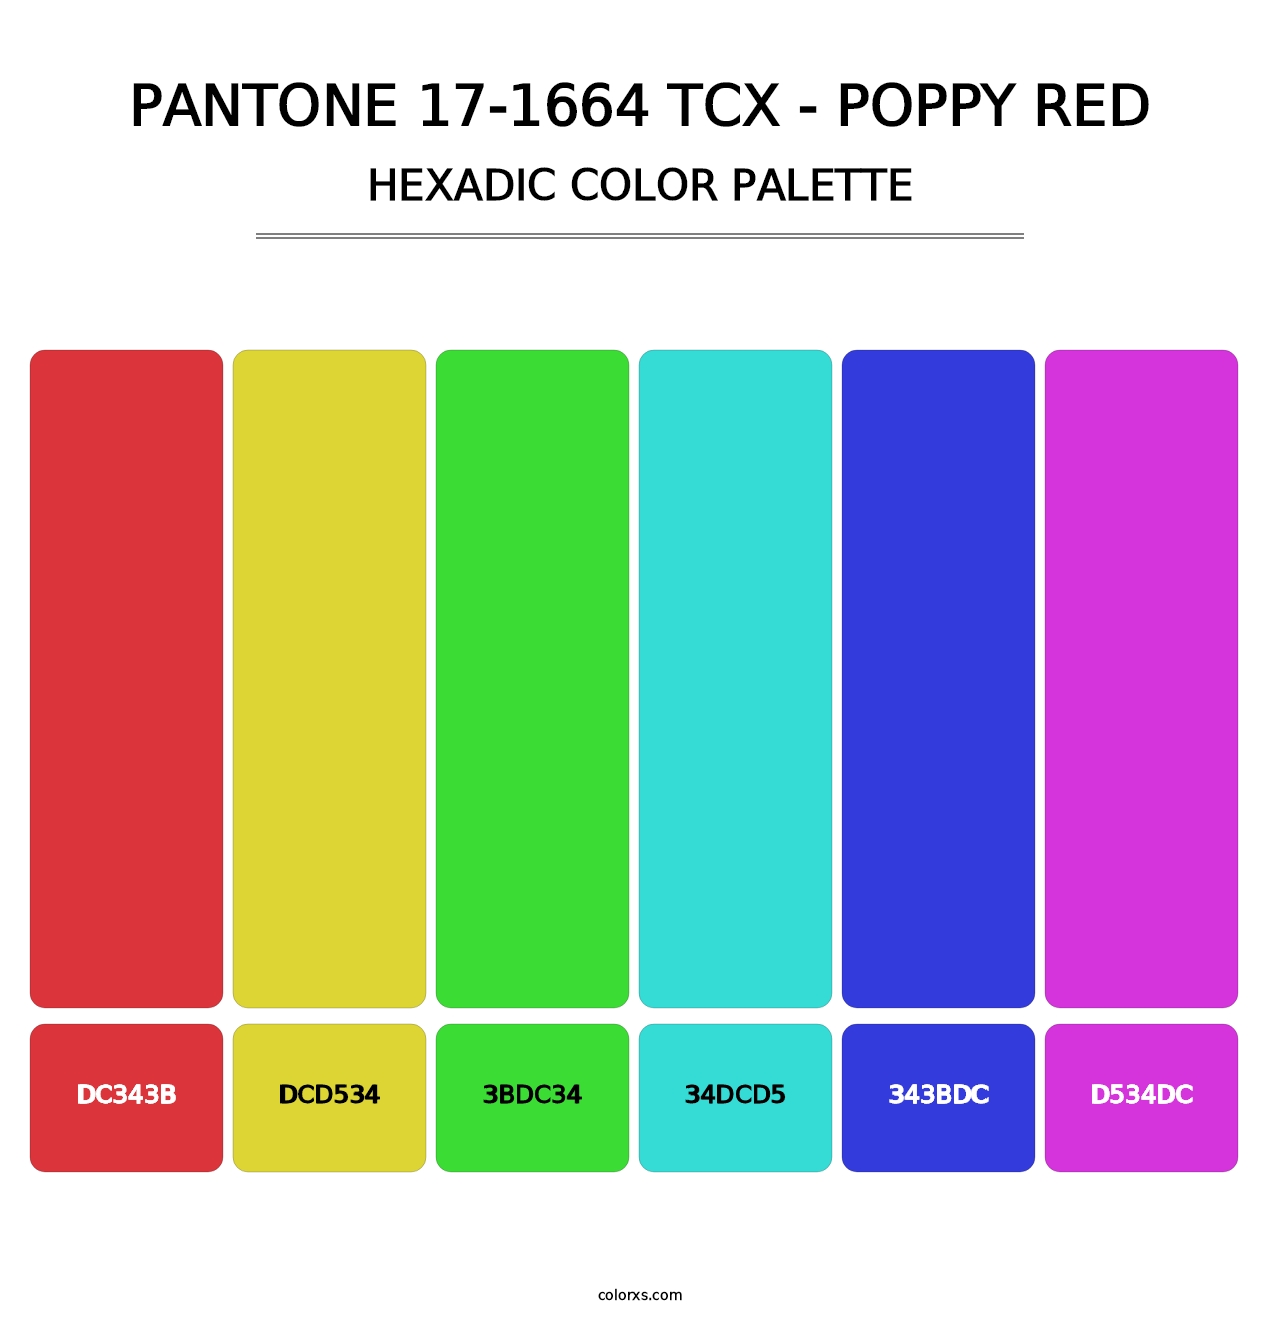 PANTONE 17-1664 TCX - Poppy Red - Hexadic Color Palette